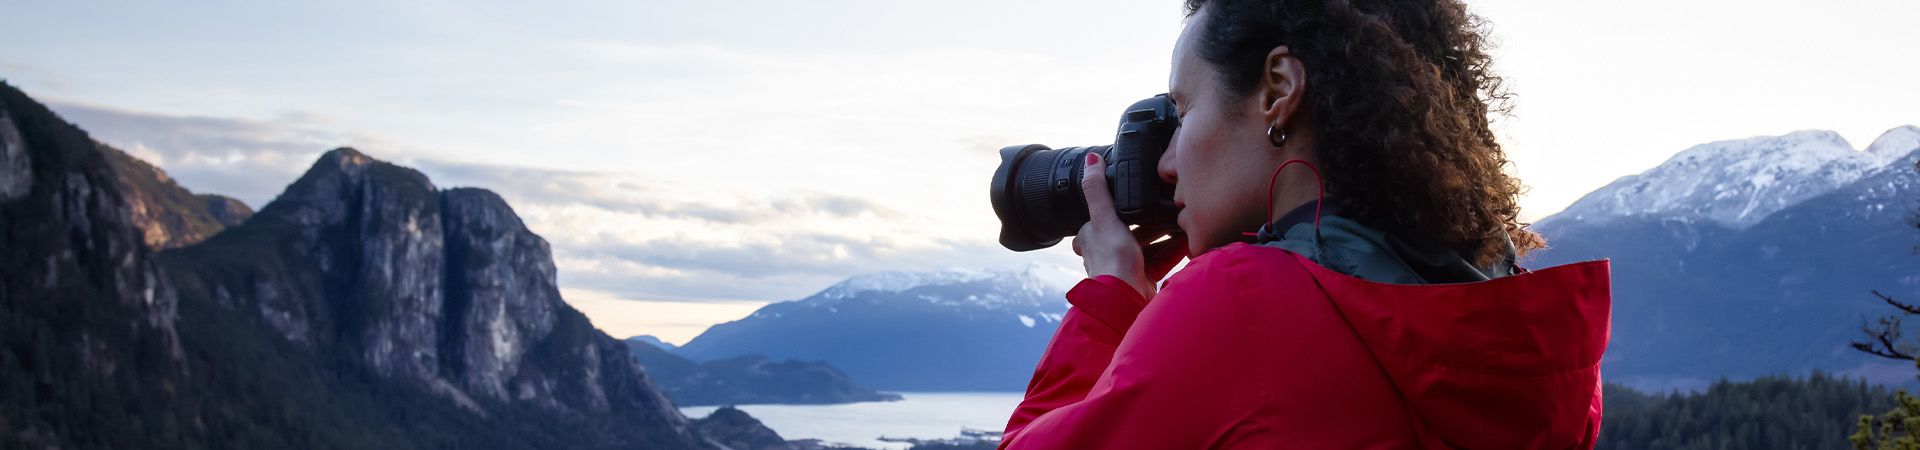 Landscape photography: Woman photographing a mountain landscape.